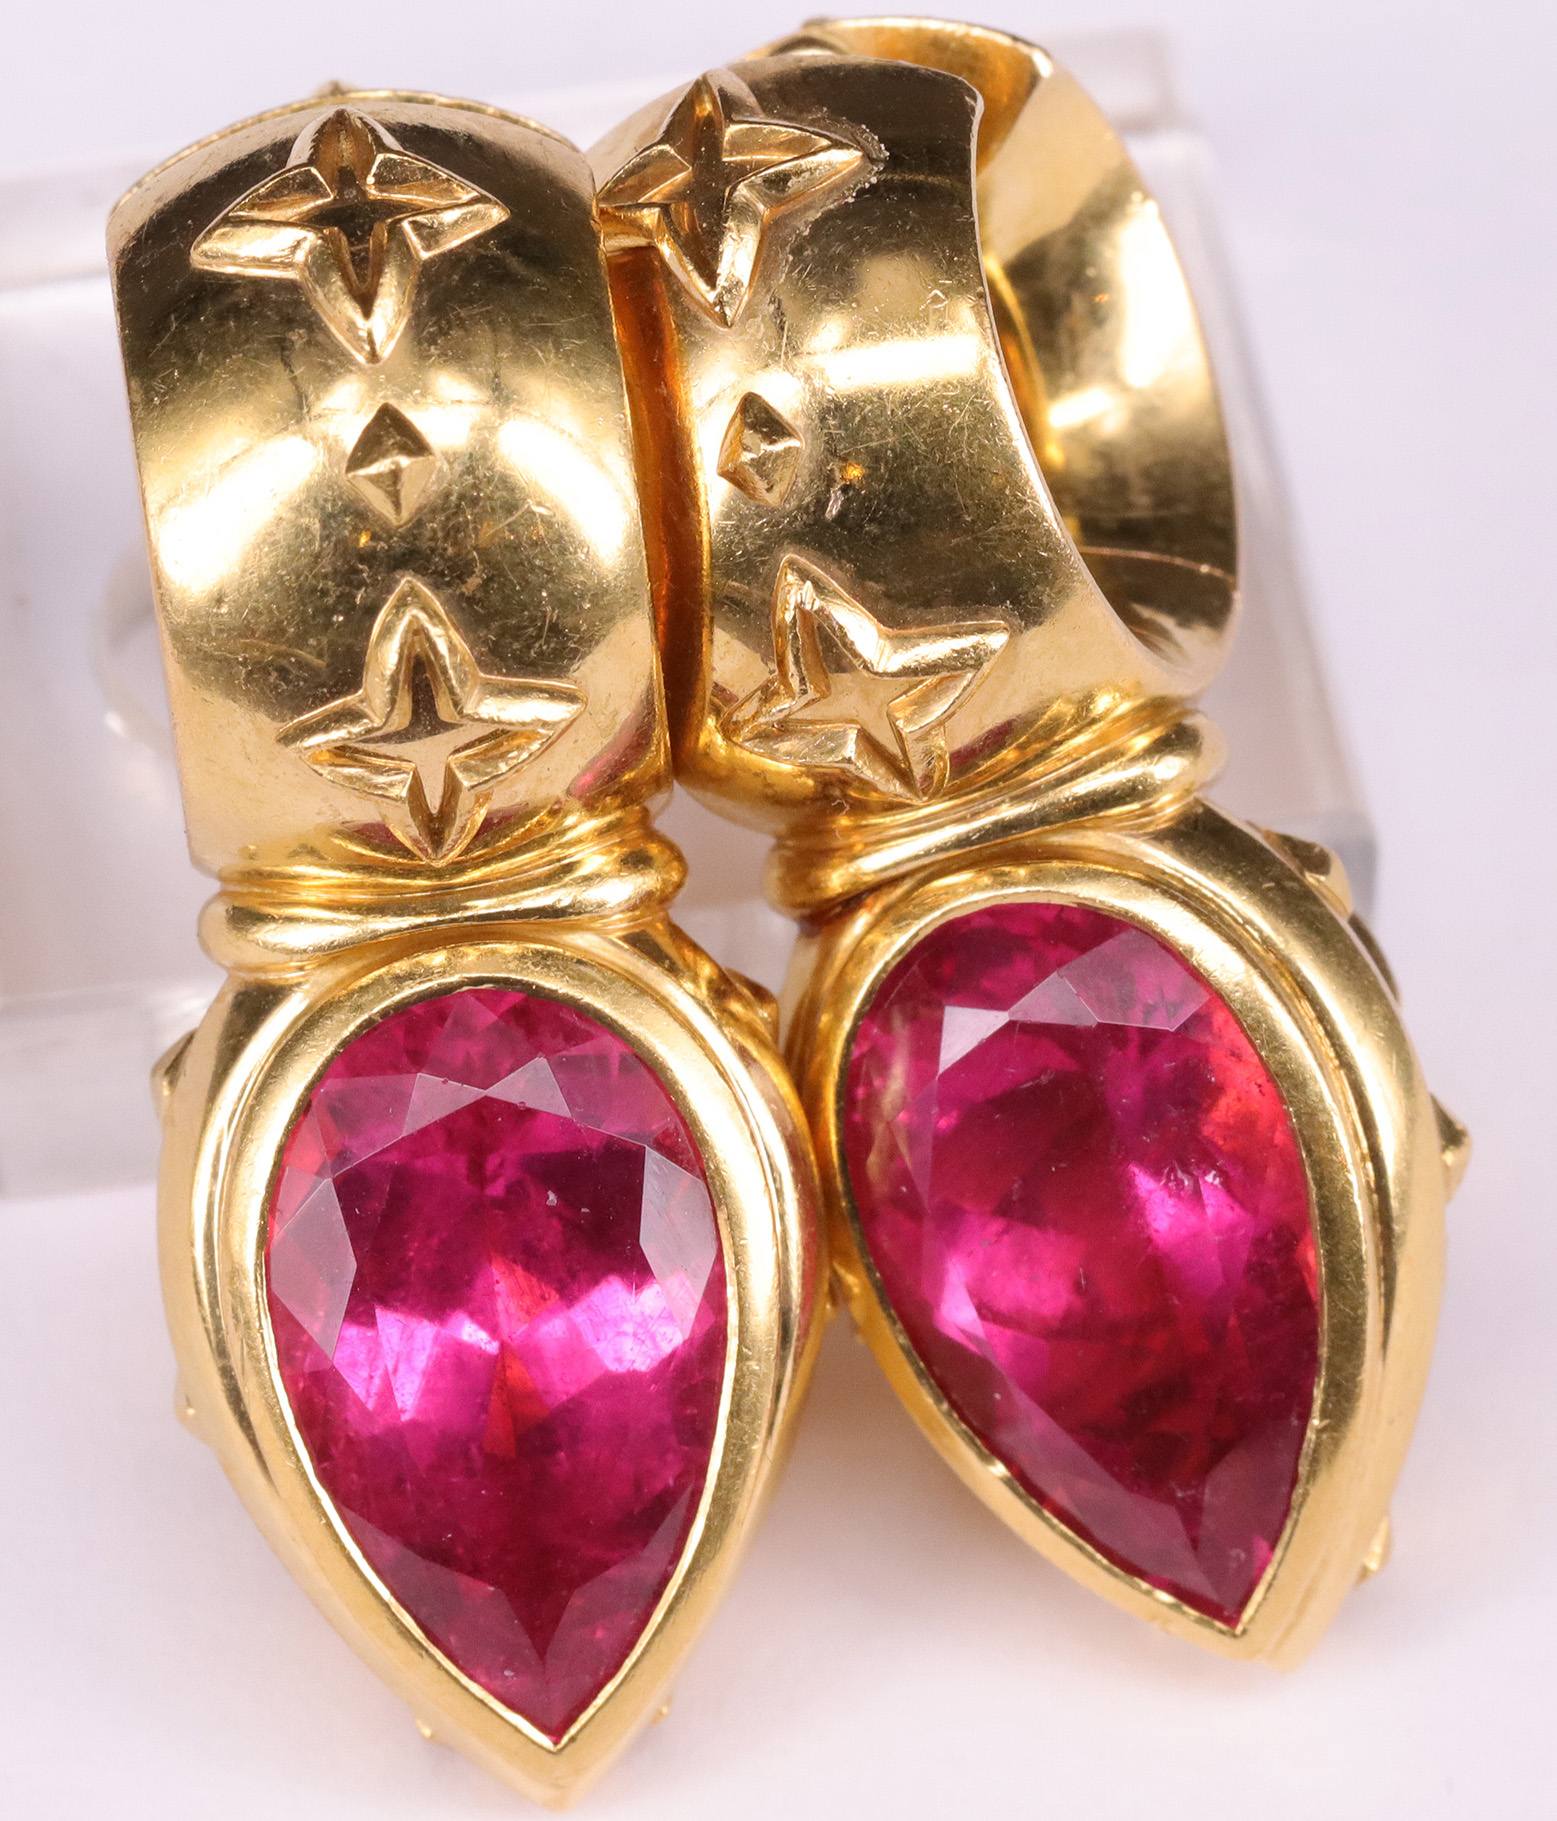 Paar Ohrhänger, Fa. Jakob / pair of earrings. 750er GG, mit pinkfarbenem Turmalin und Sternchen,